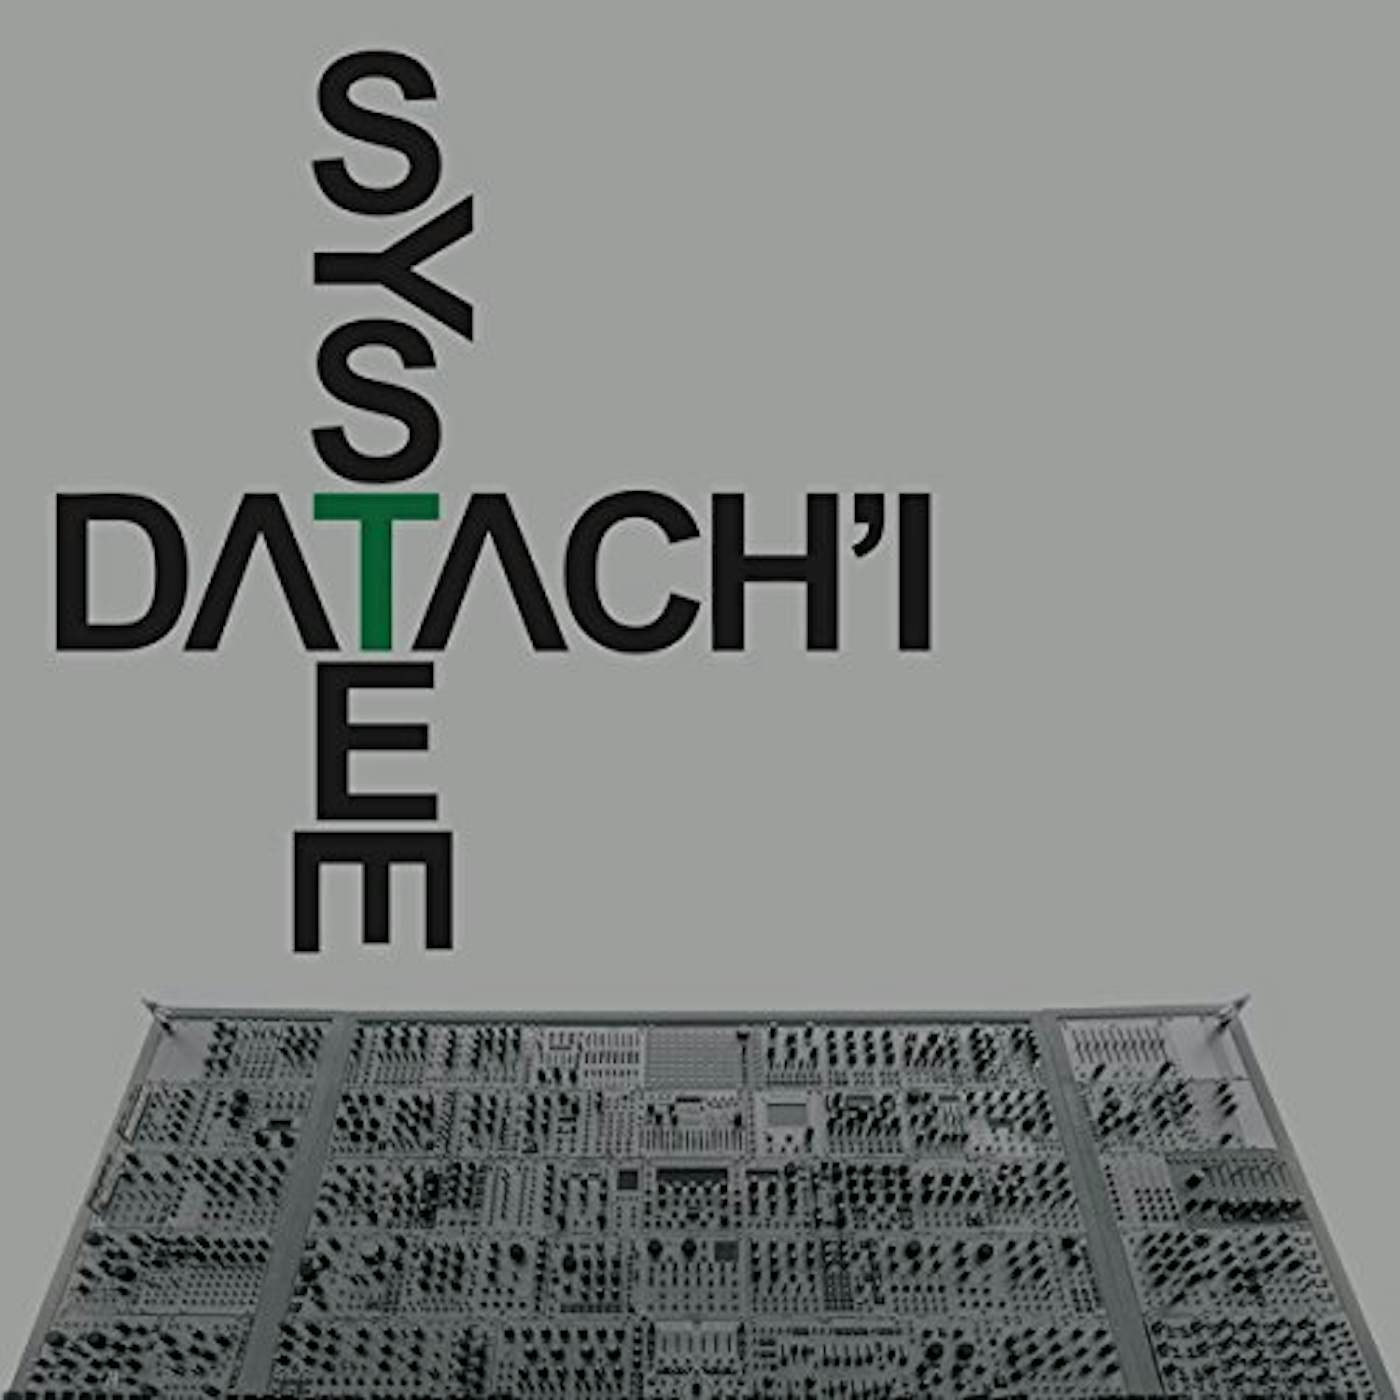 Datach'i SYSTEM CD